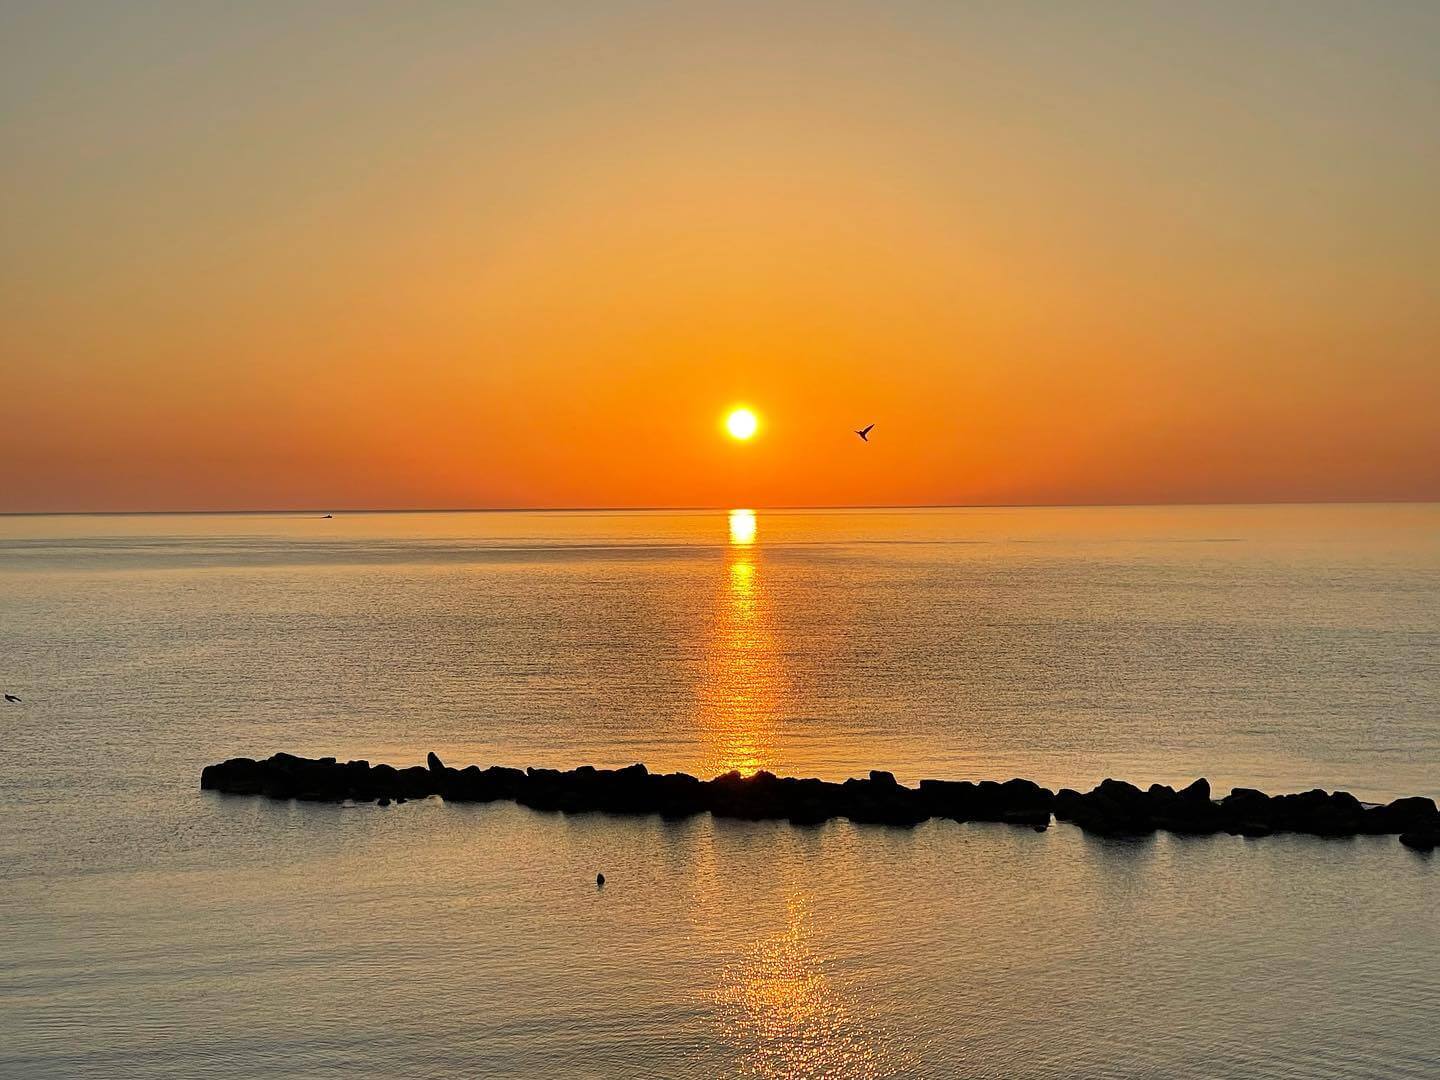 Sunrise delight in Calabria. #ilikeitaly #travelphotography #sunrise #calabria @italiait